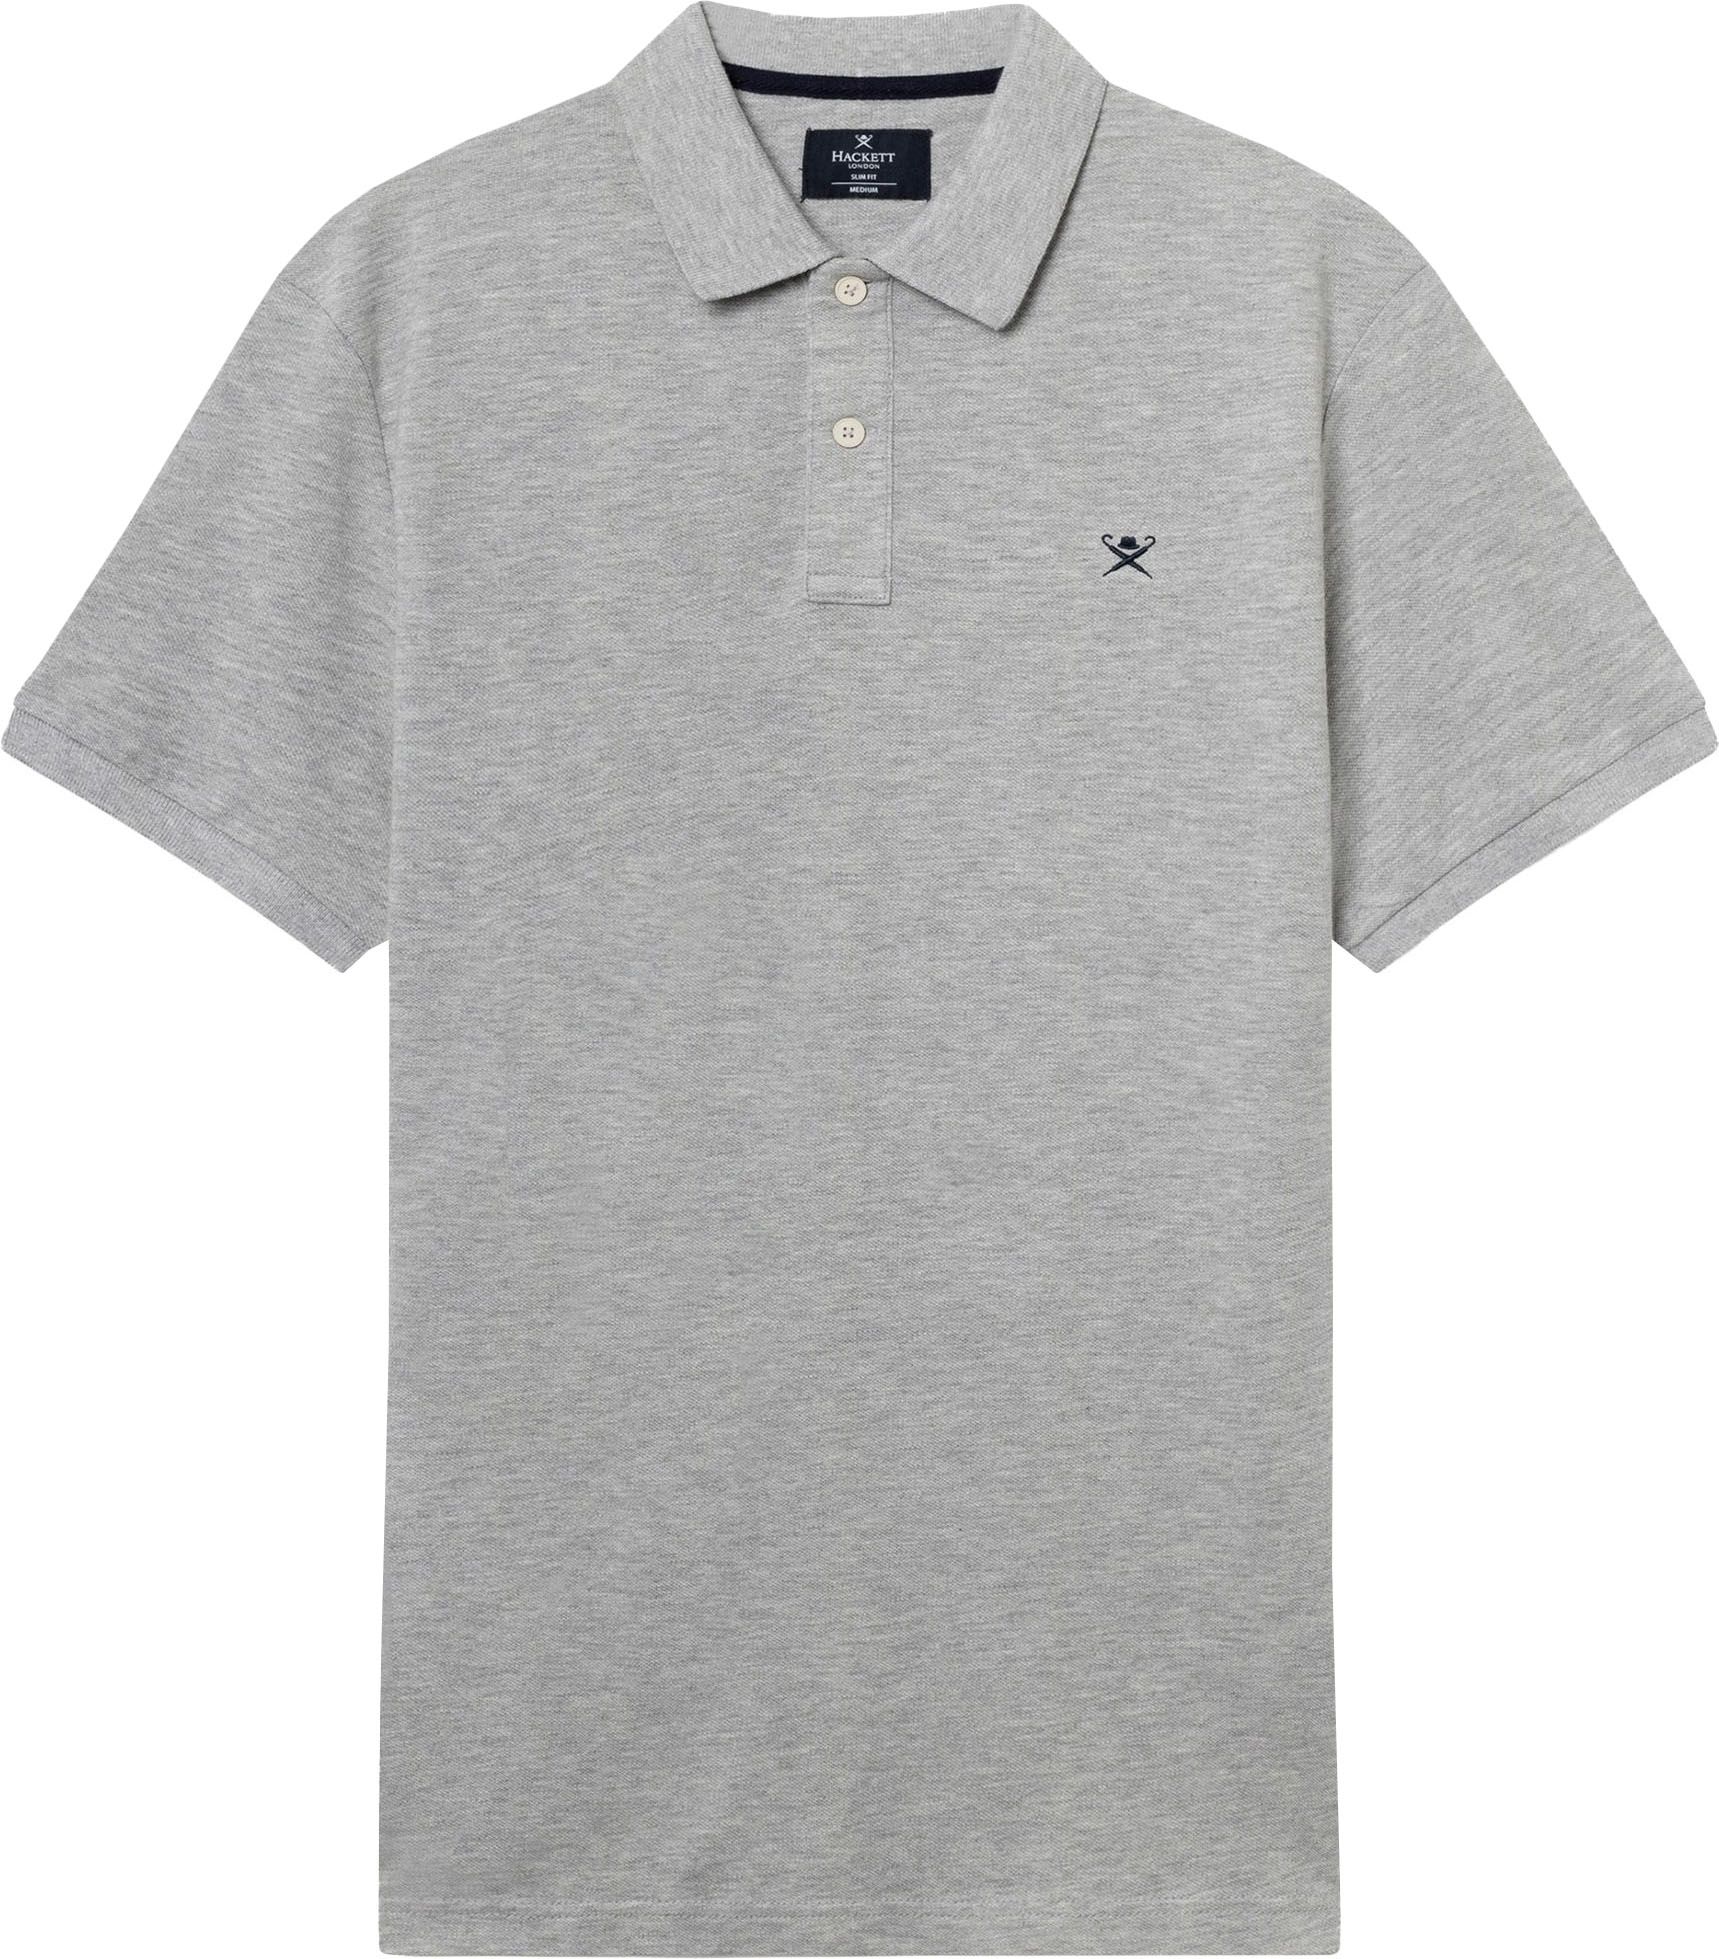 Hackett Polo Shirt Grey size L